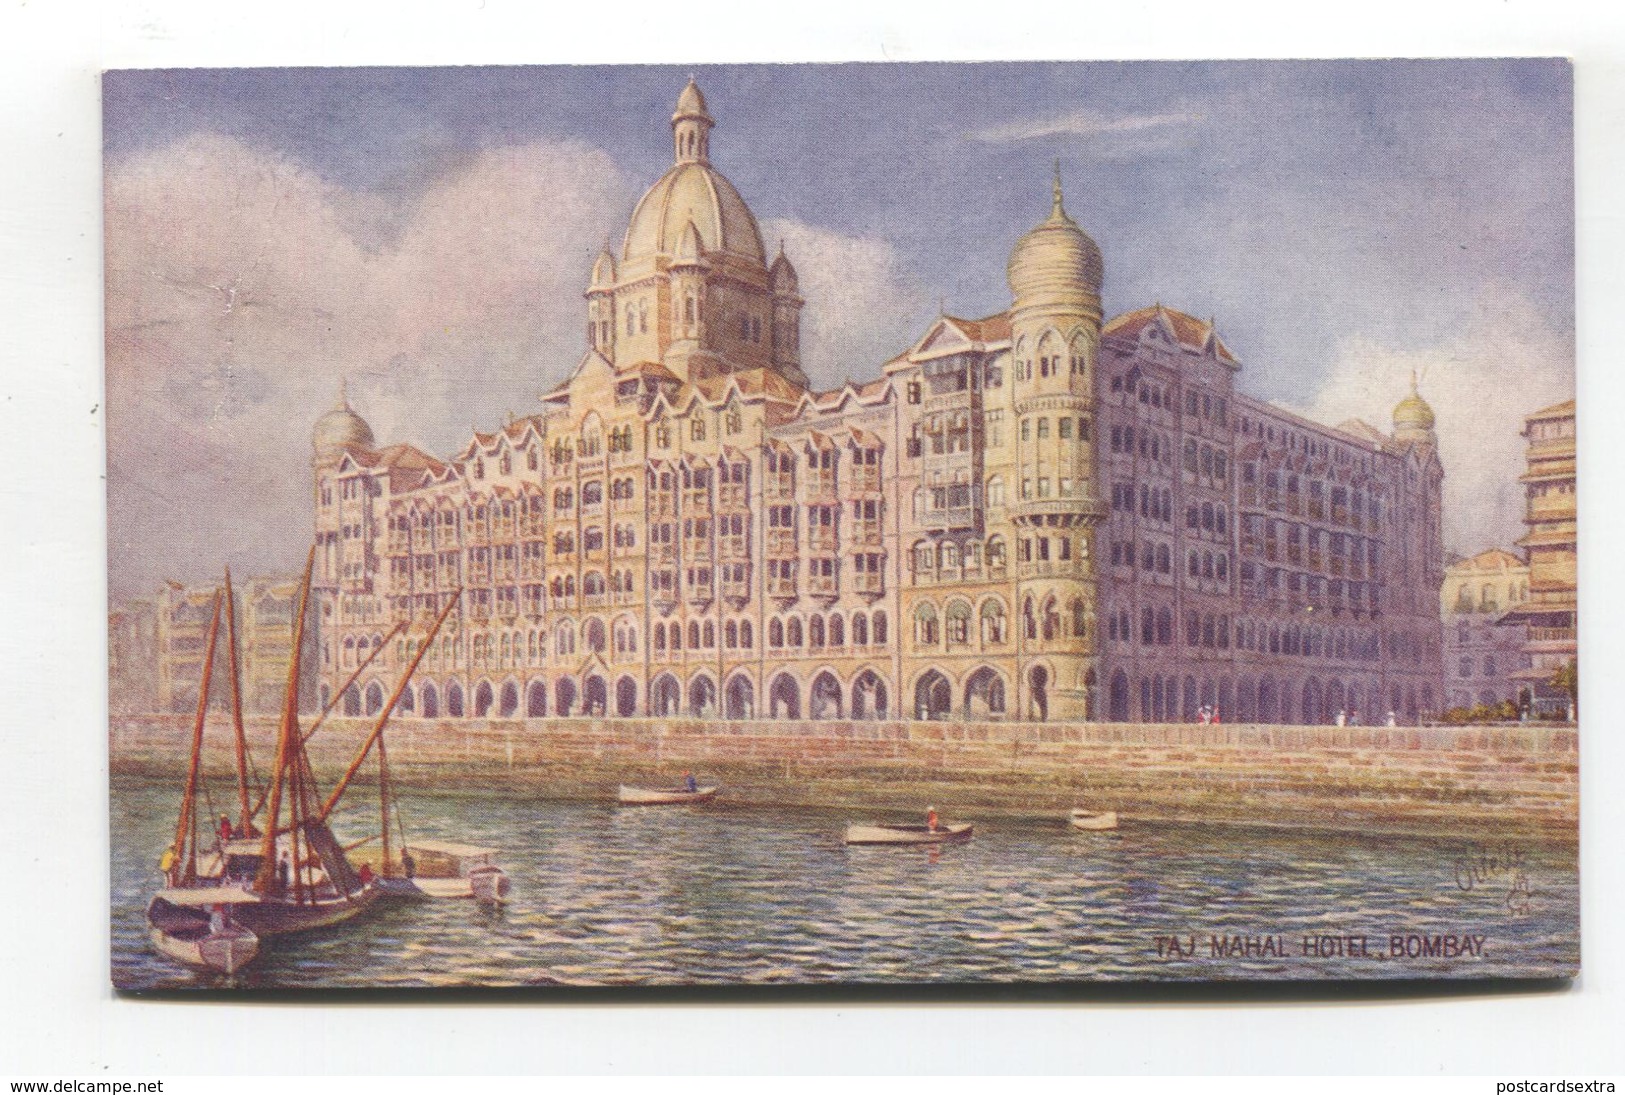 Bombay - Taj Mahal Hotel - Old Tuck Postcard No. 8925 - India